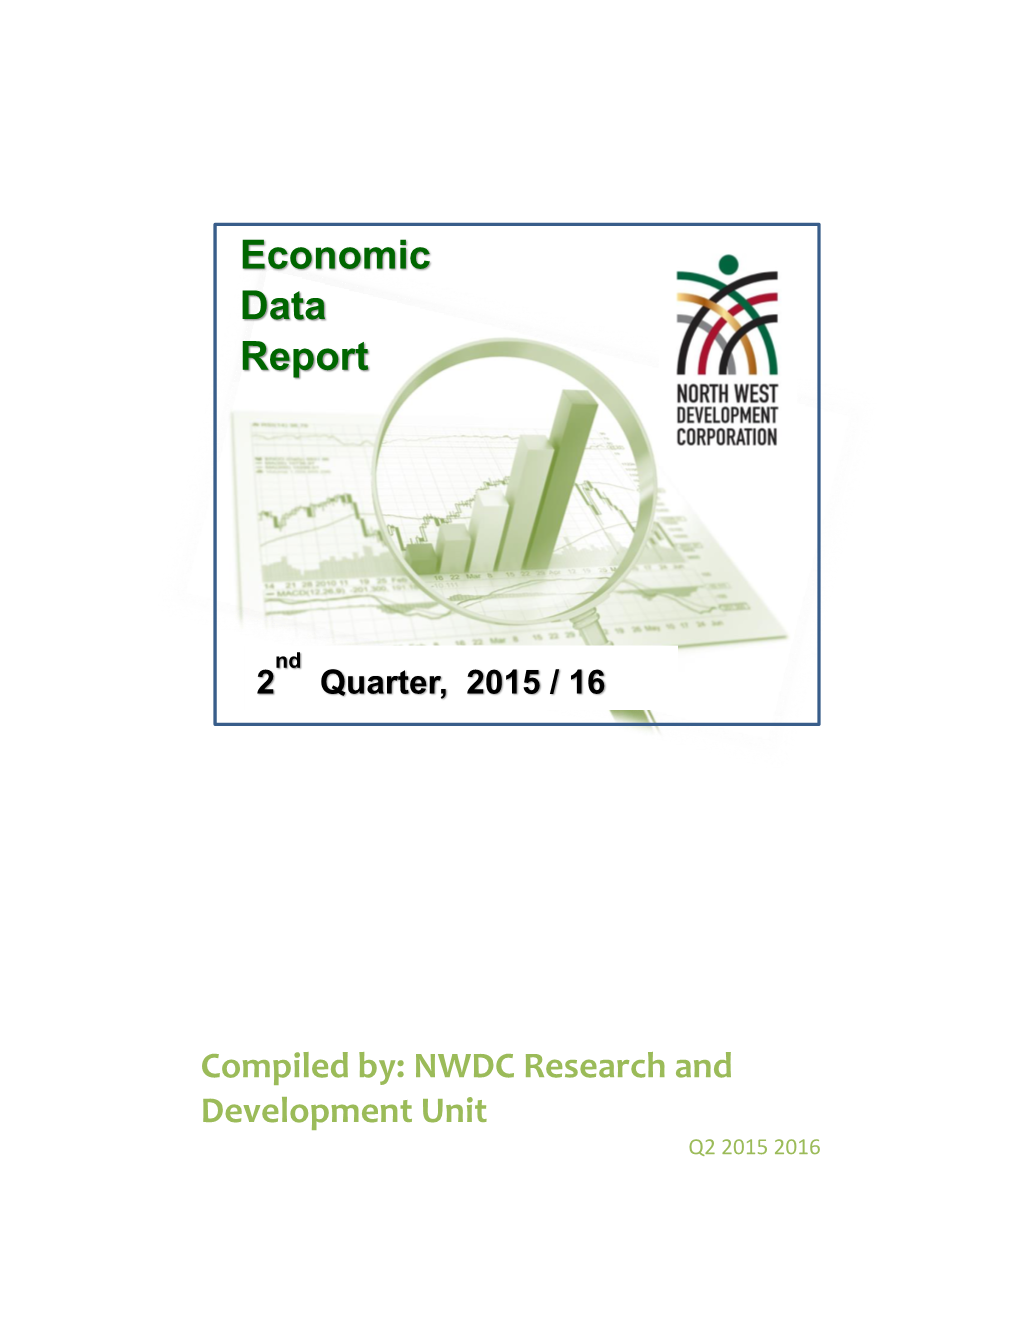 Economic Data Report